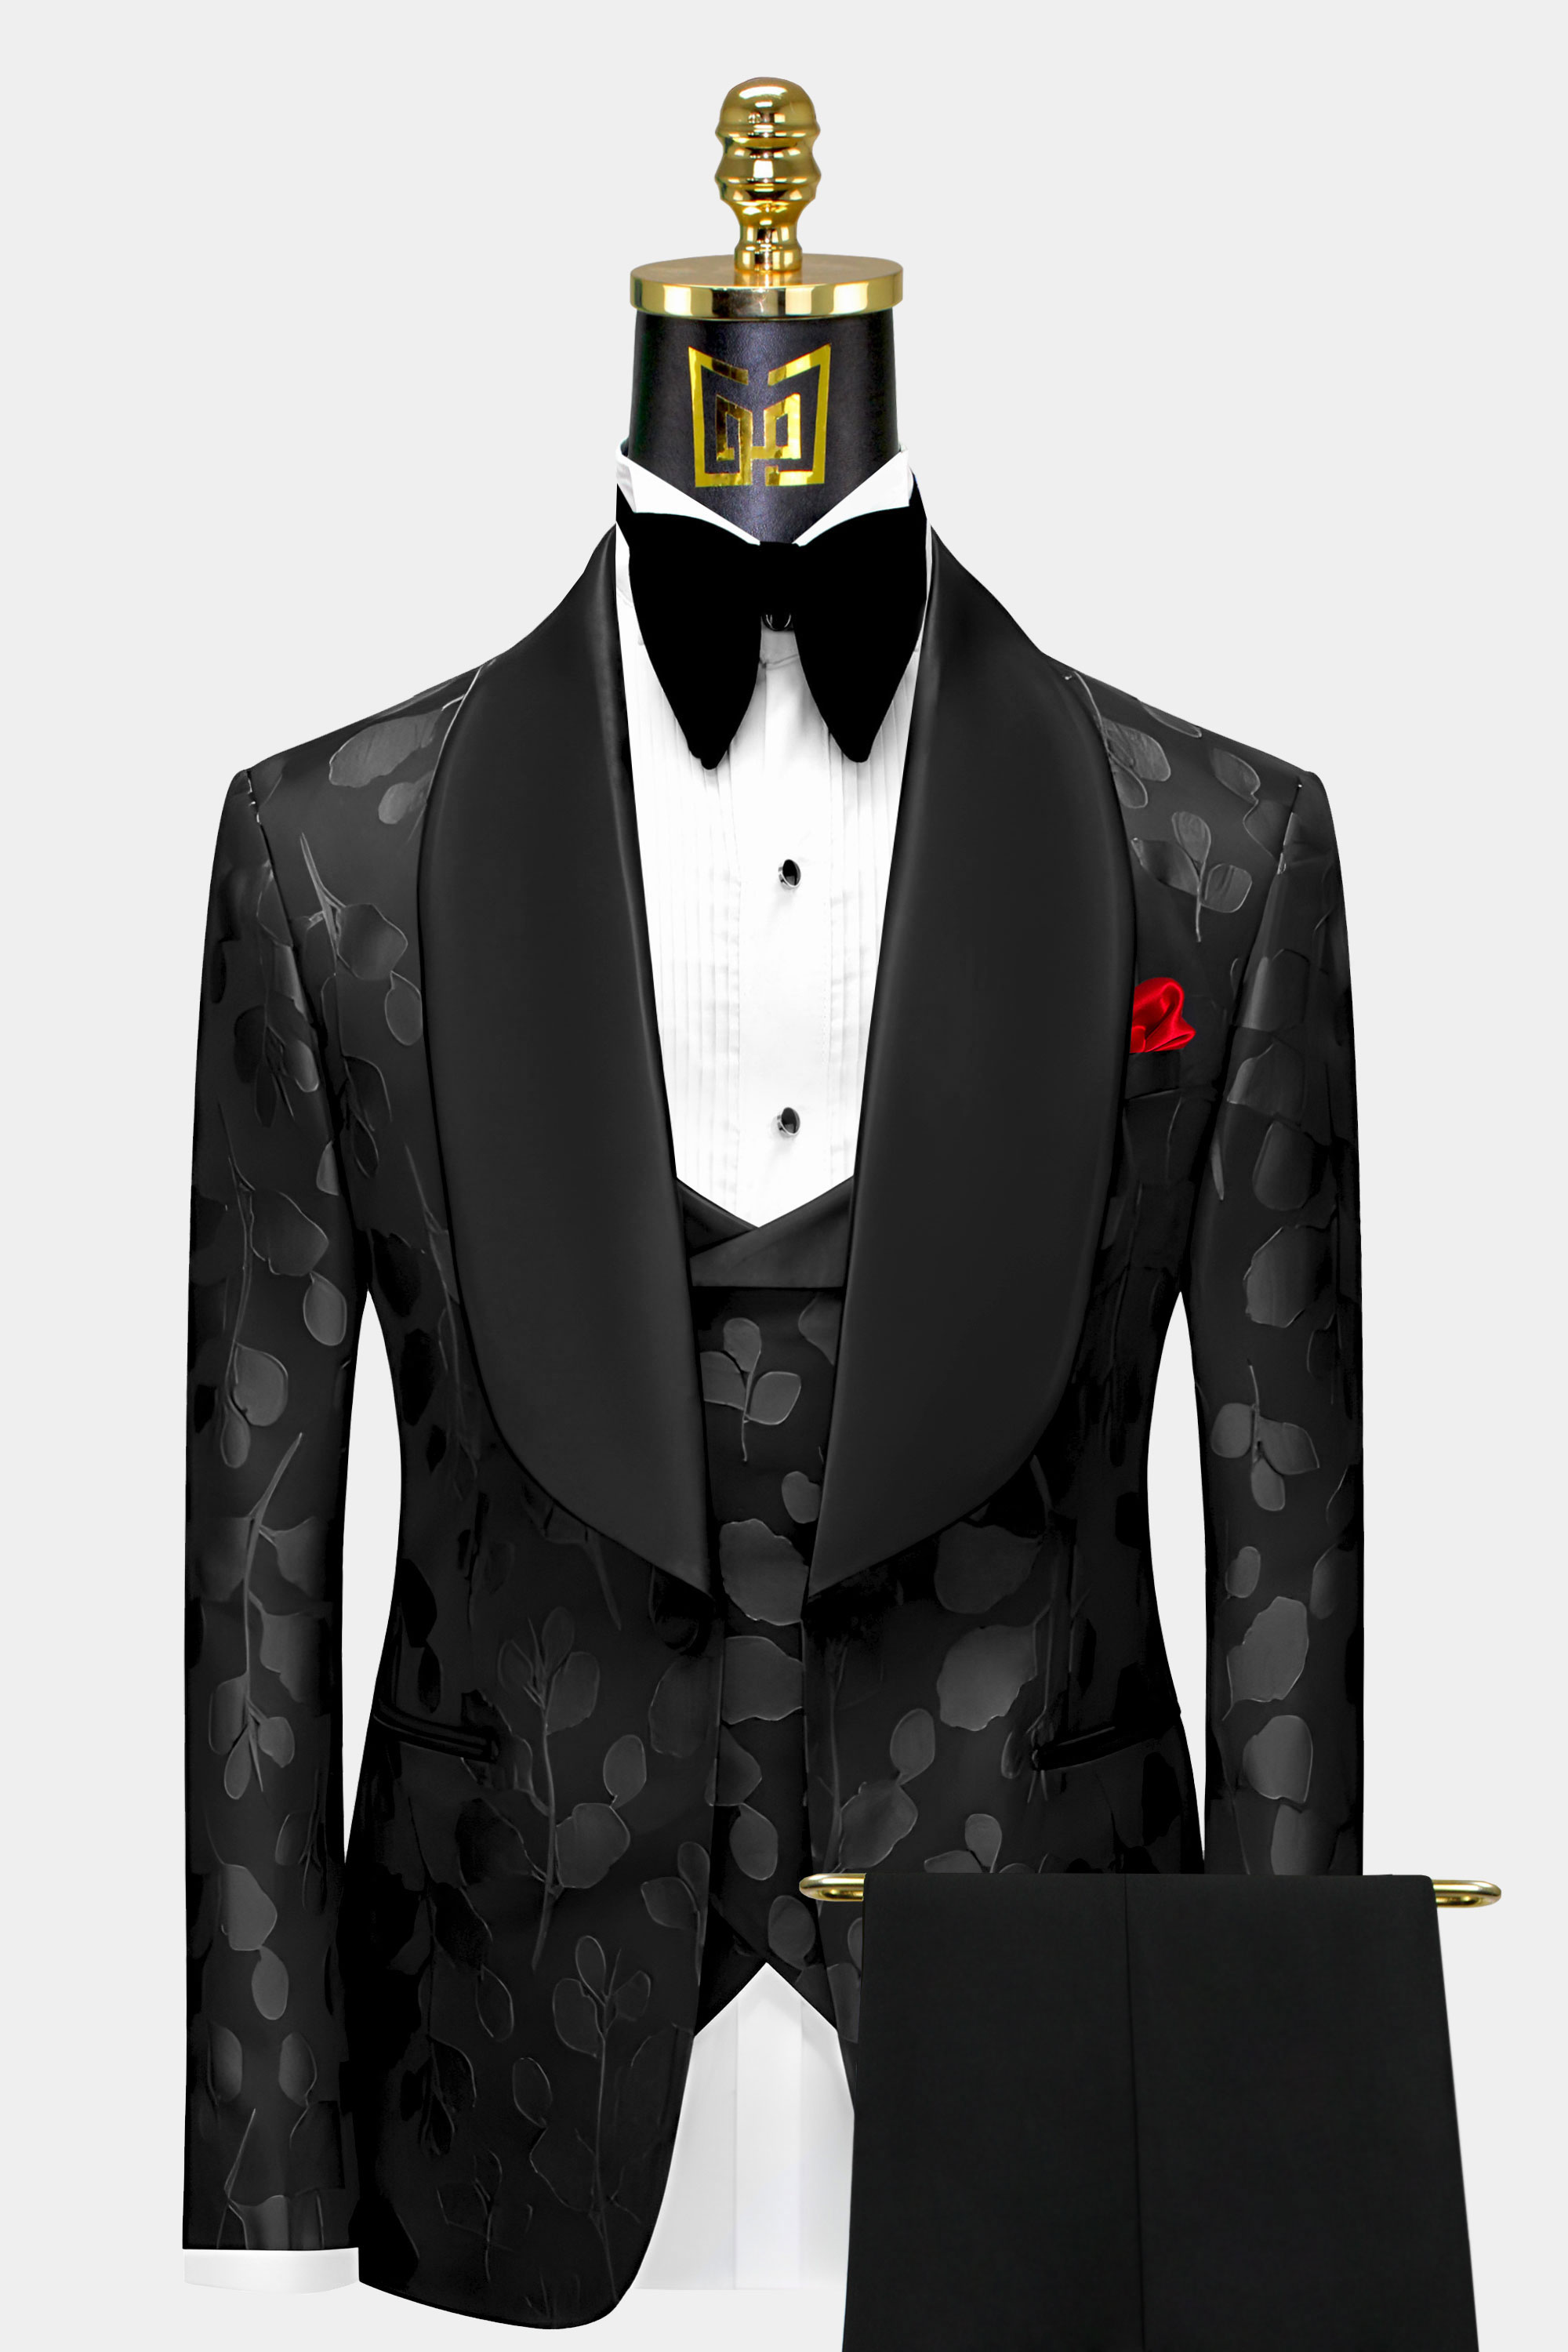 Black-On-Black-Tuxedo-Wedding-Prom-Suit-from-Gentlemansguru.com